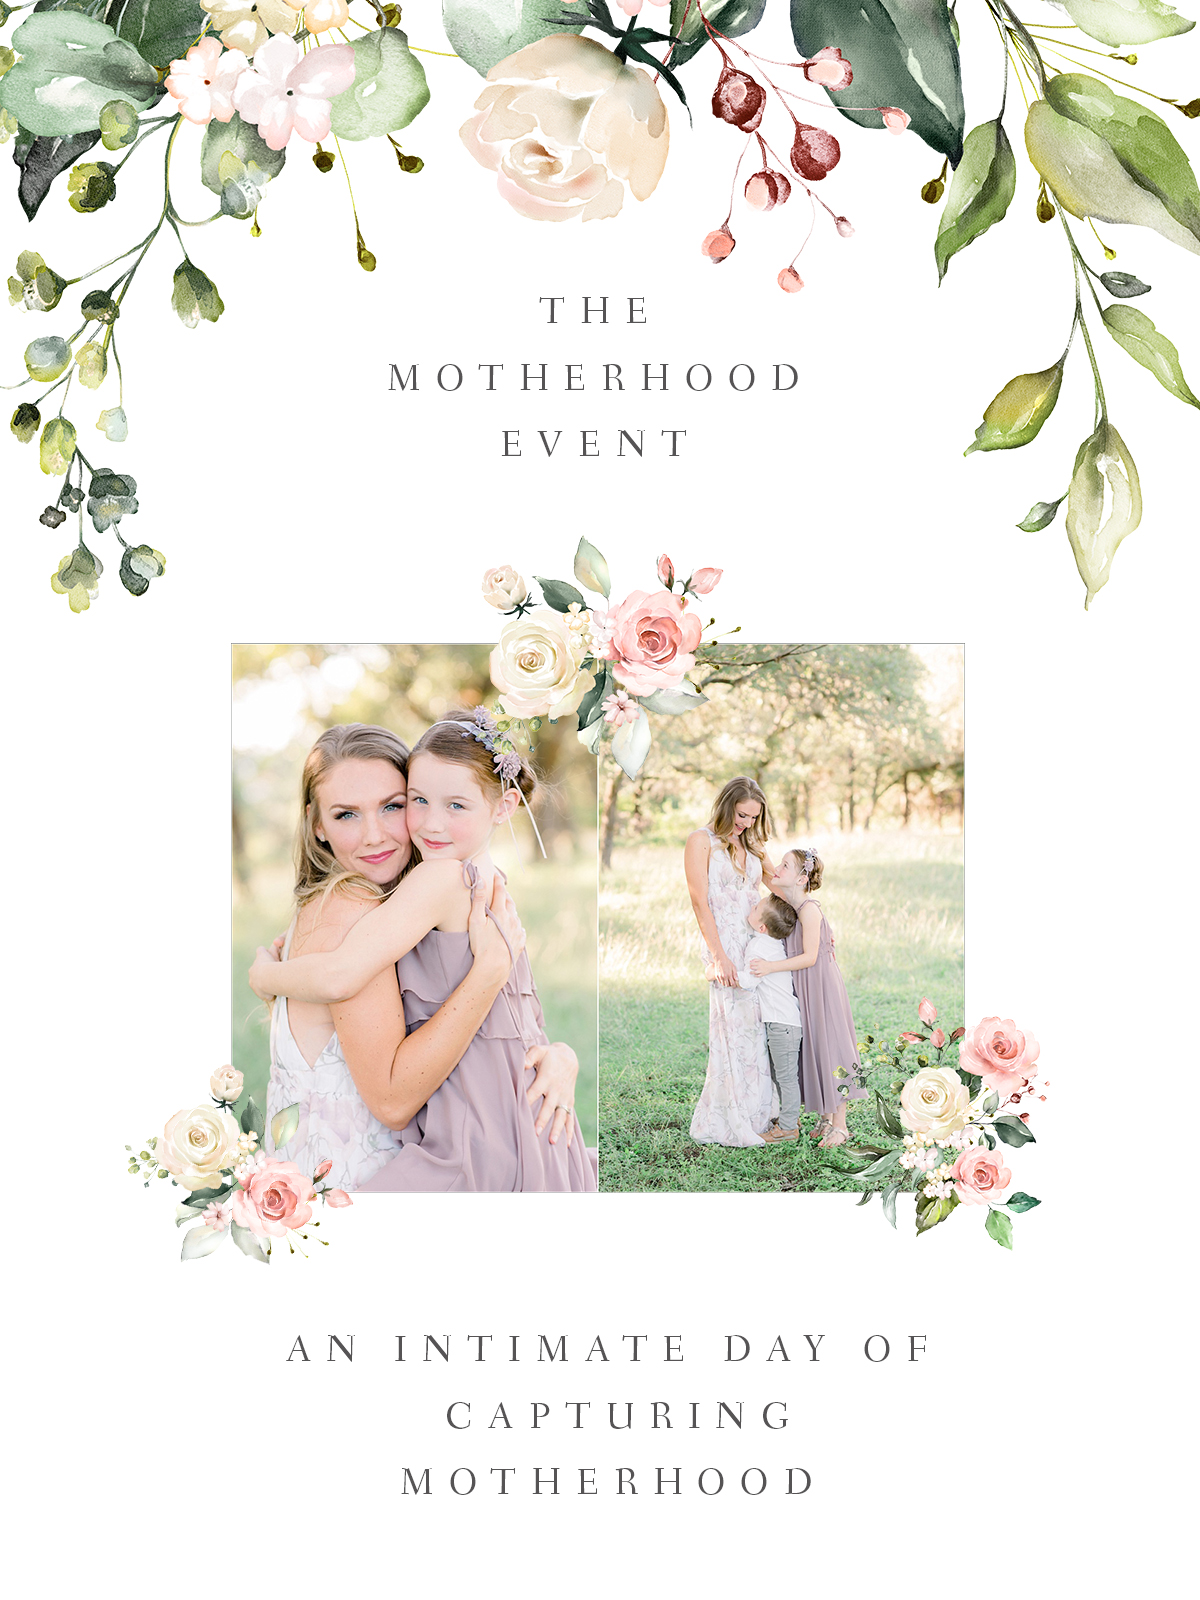 The Motherhood Event